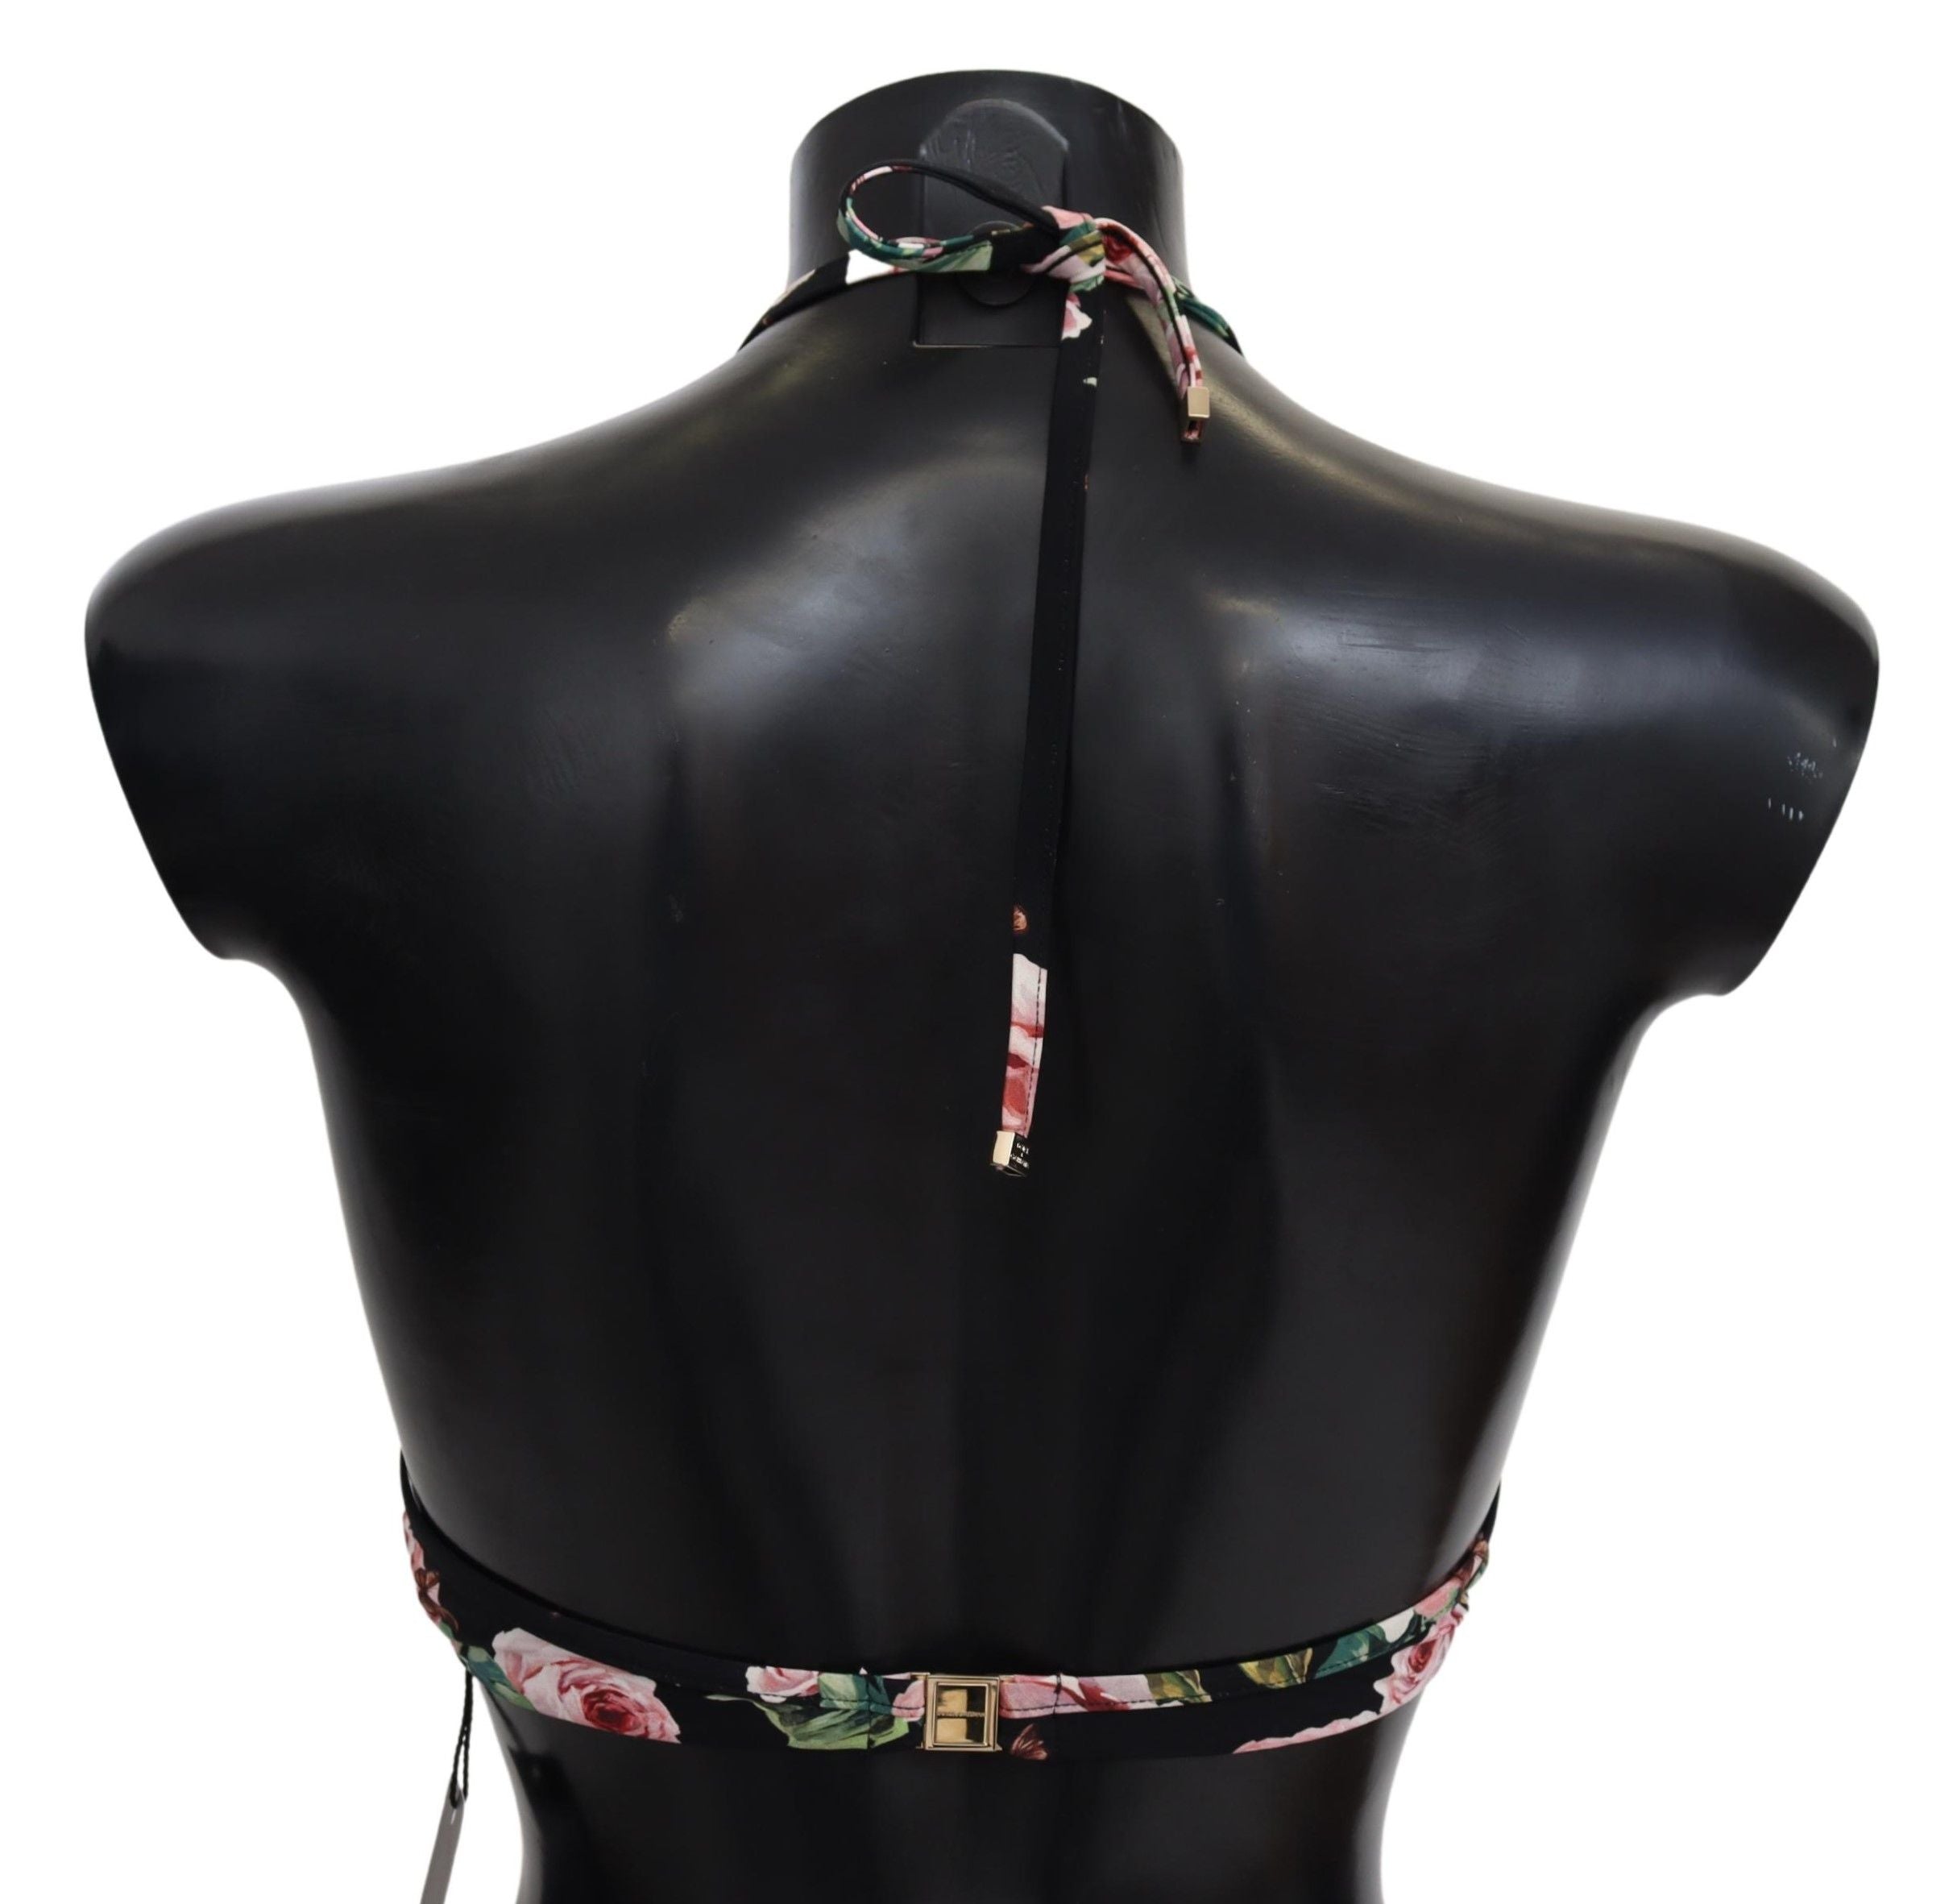 Dolce & Gabbana Black Roses Print Swimsuit Beachwear Bikini Tops